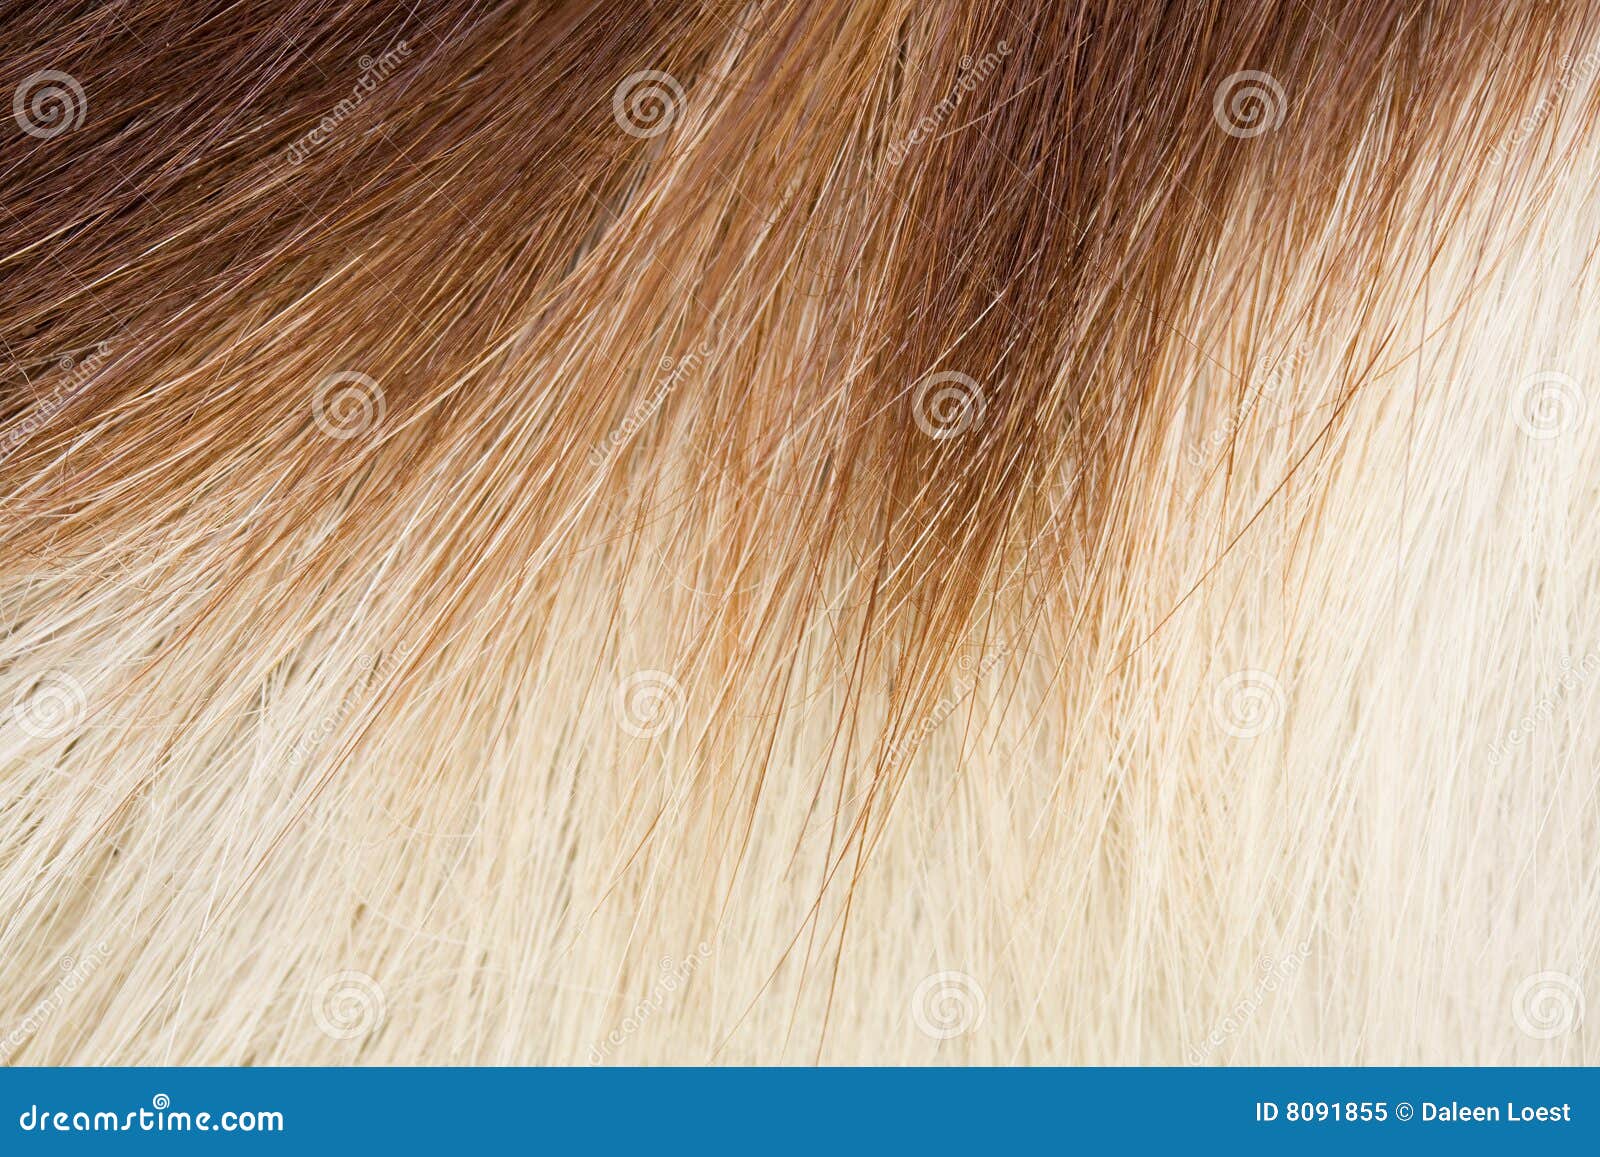 springbok hair